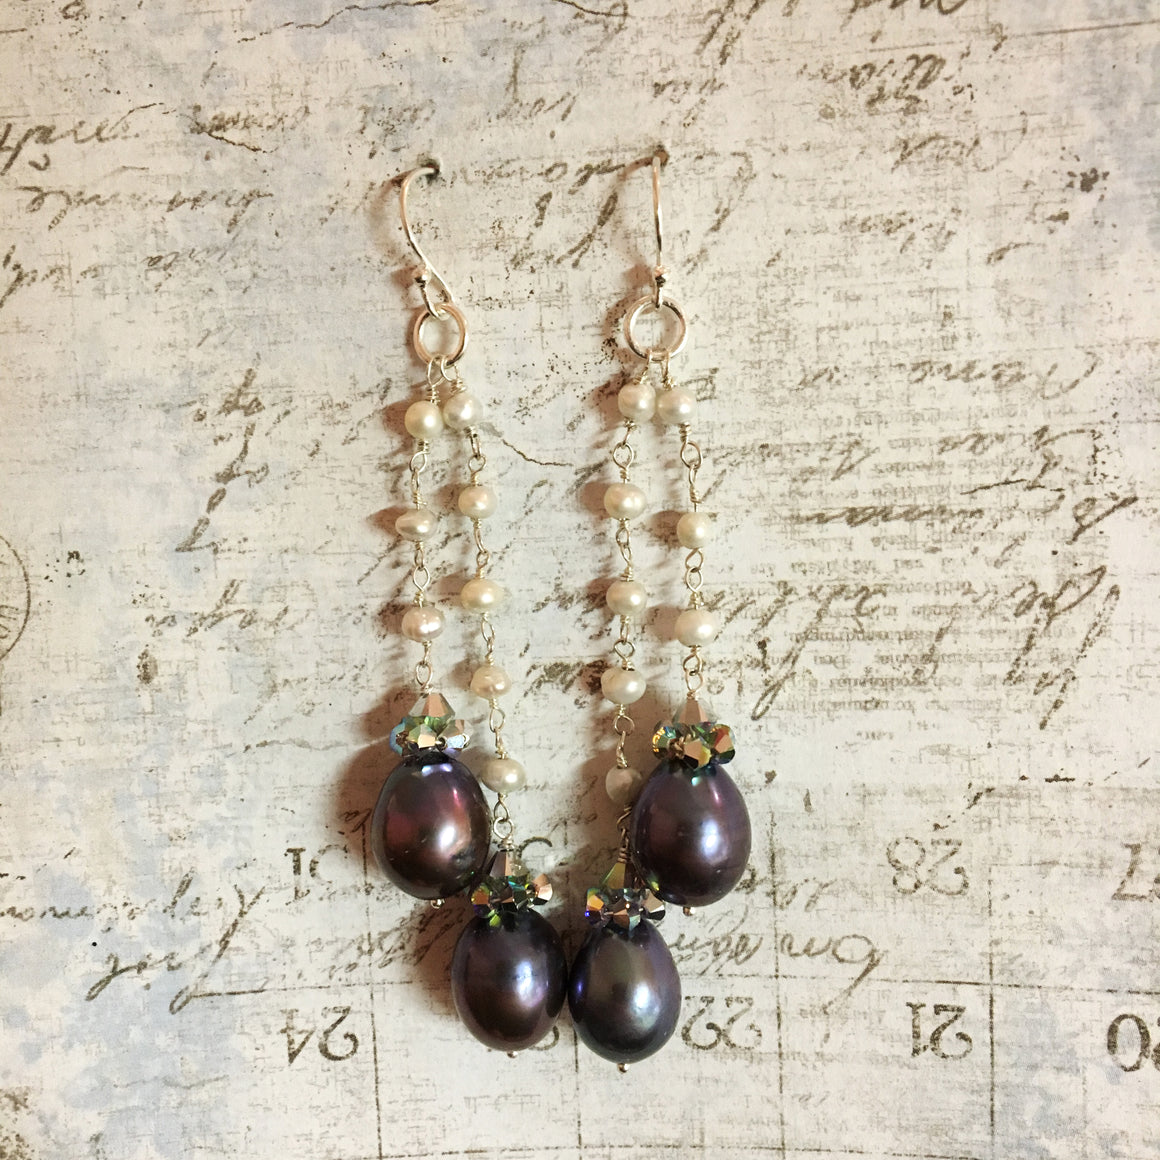 Collared Double Dark Pearl Earrings on Pearl Chain